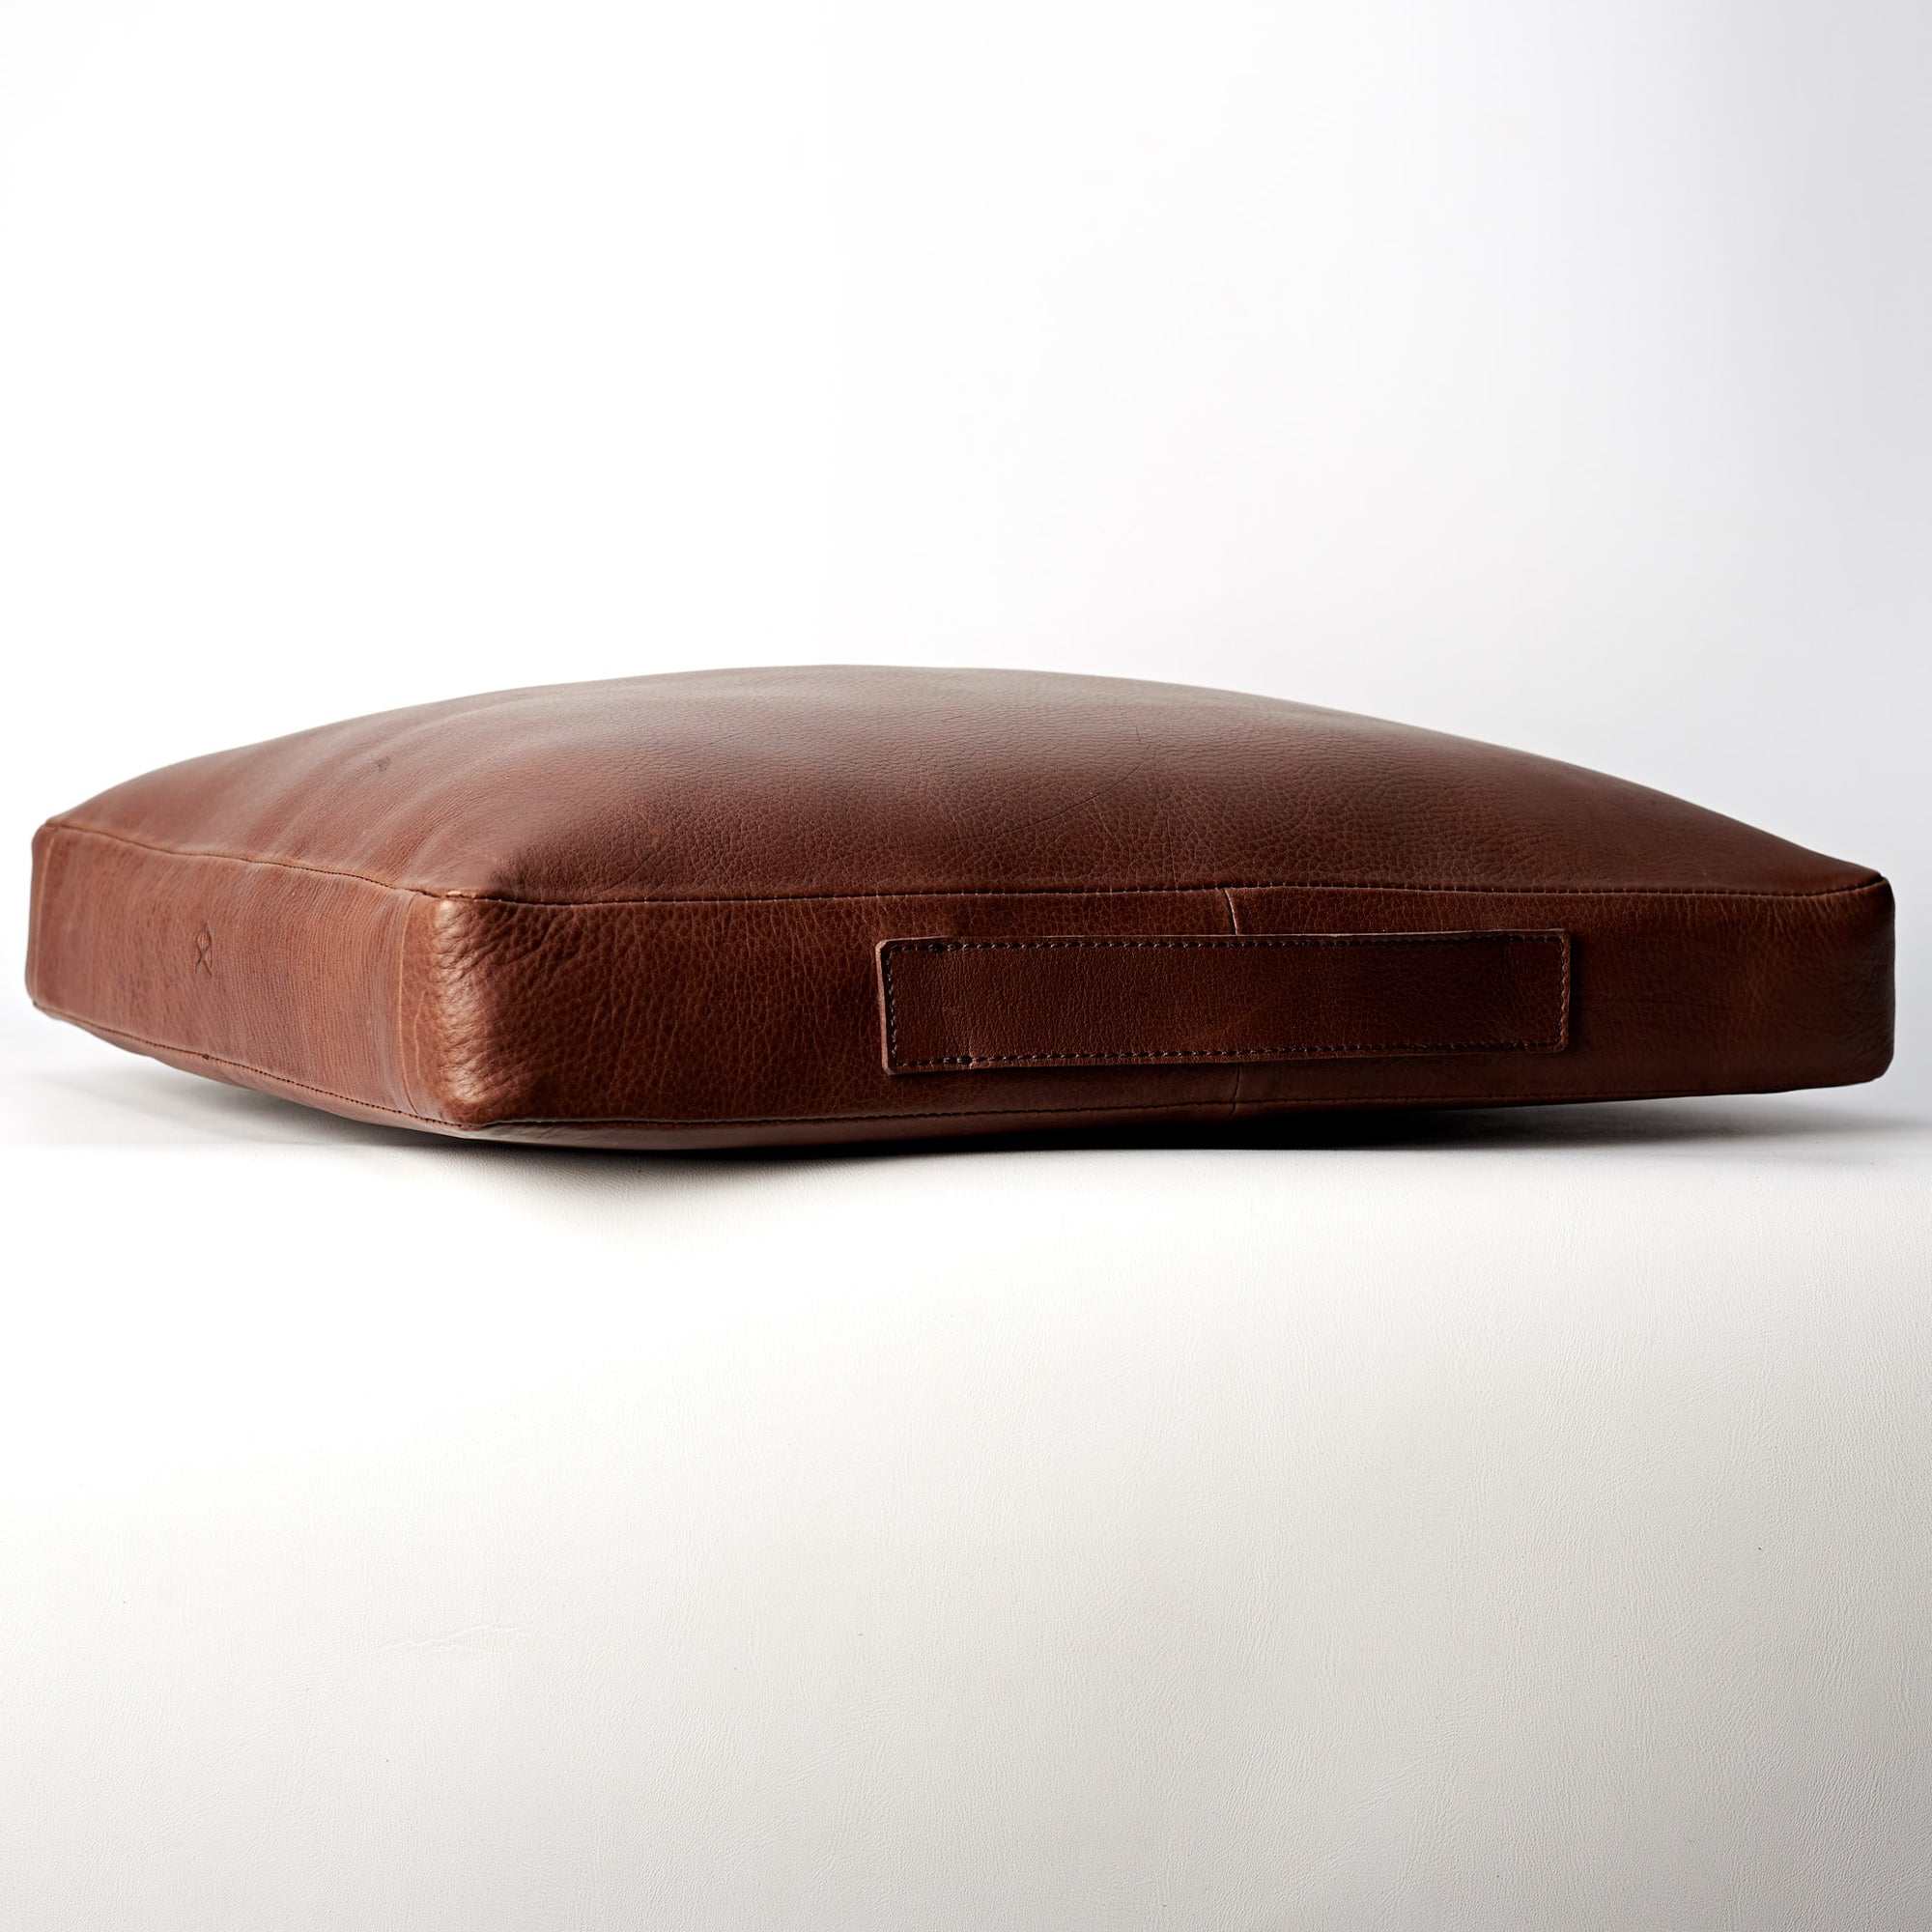 Side handler. travel meditation cushion. Leather meditation cushion, perfect for yoga and meditation. Modern squared zafu